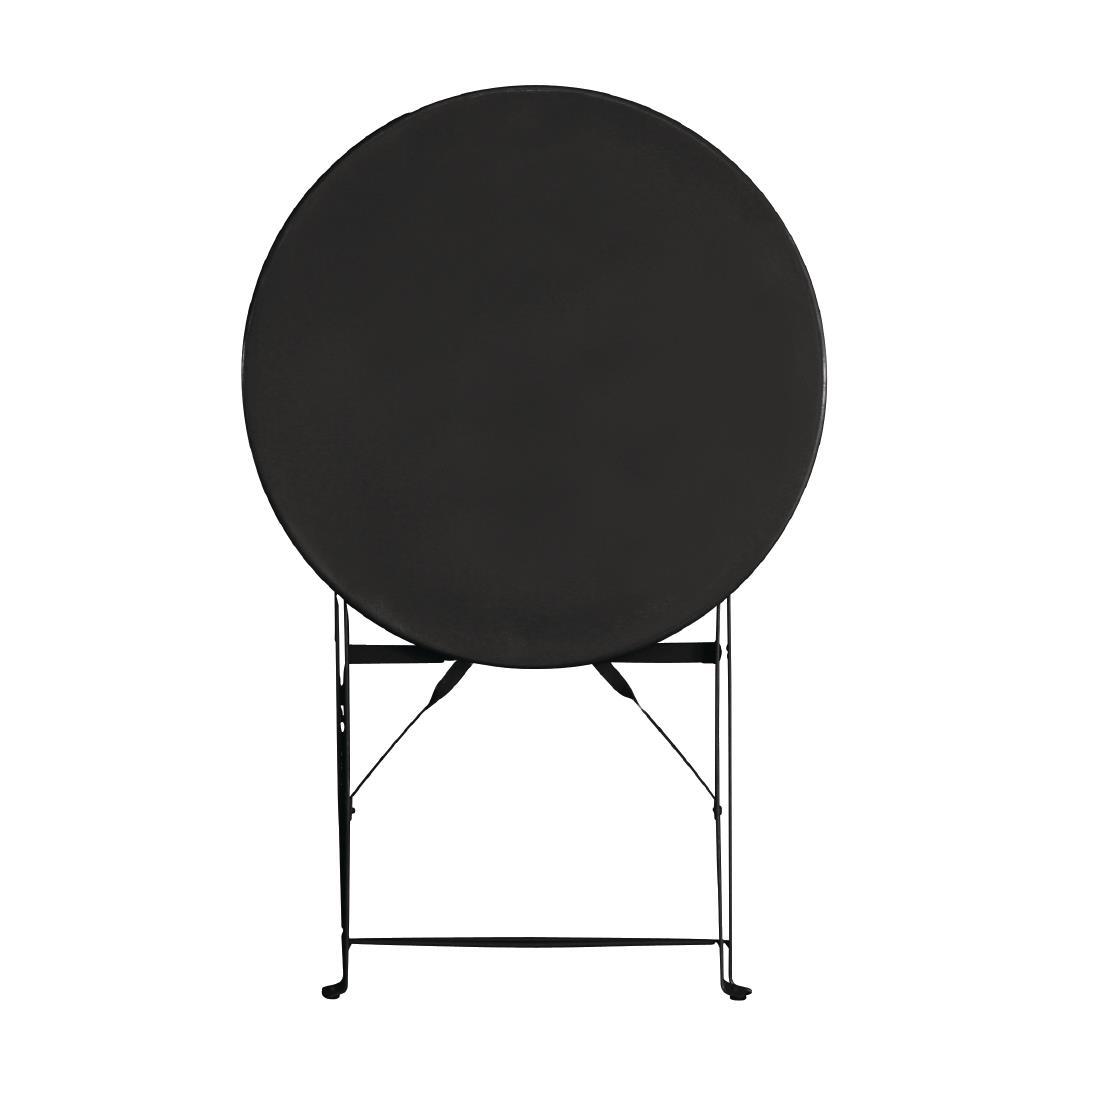 Bolero Black Pavement Style Steel Table 595mm - GH558  - 3